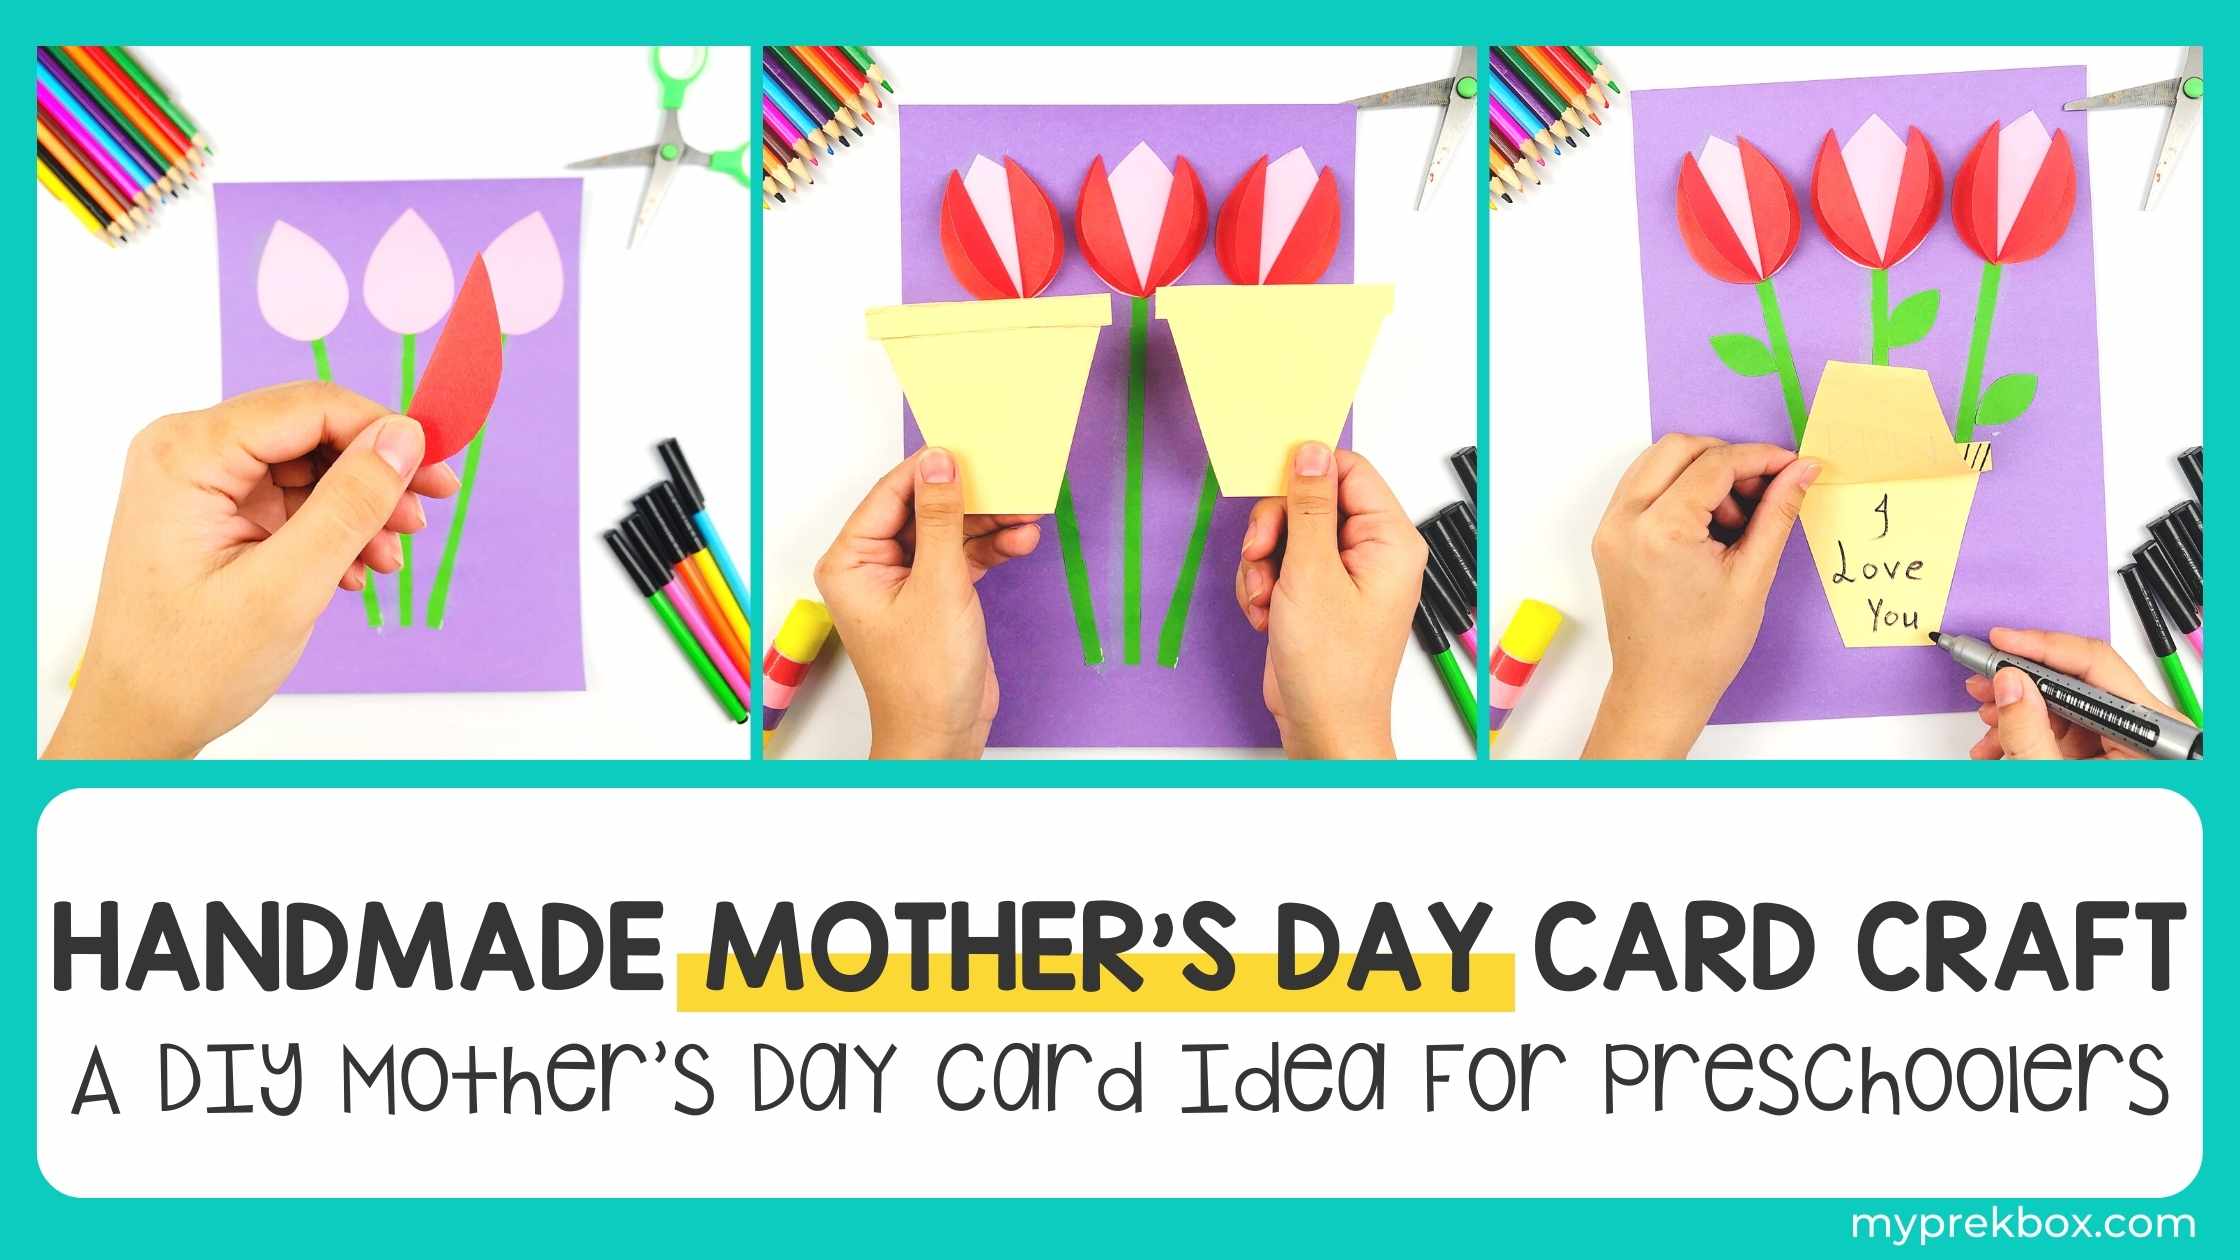 Handmade Mother's Day Card Craft for Preschool Kids